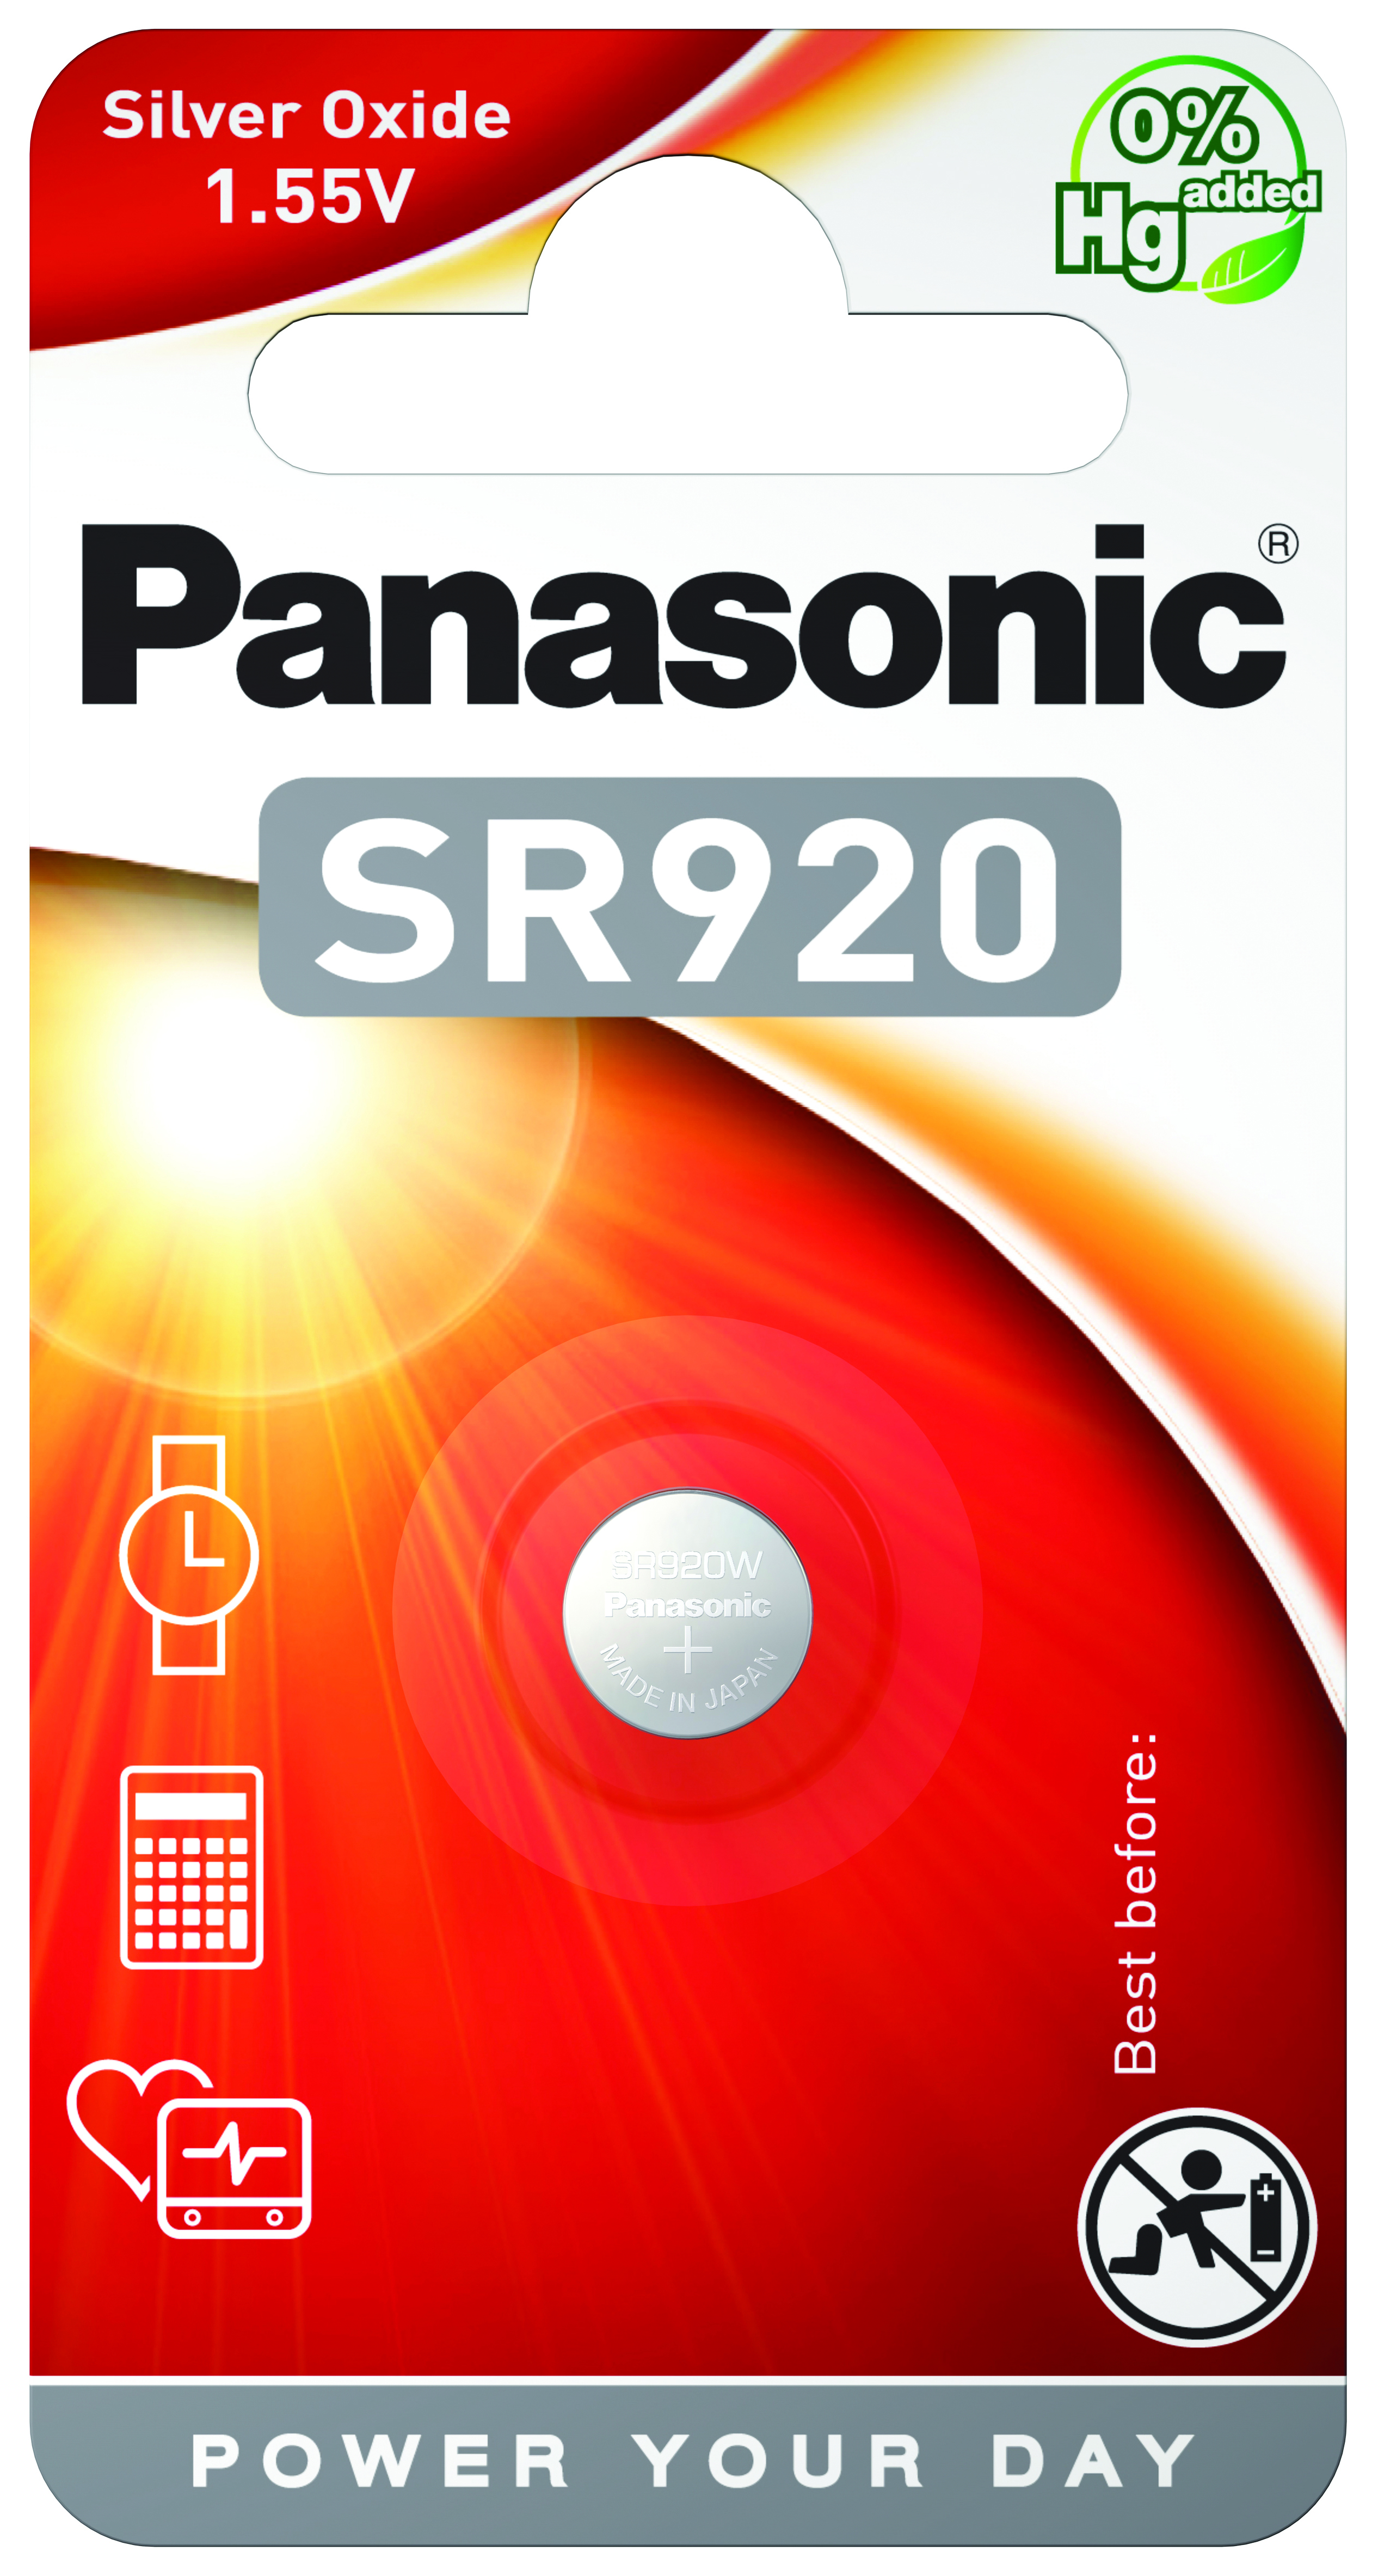 Panasonic SR920 (Silberoxid/Uhrenbatterien)